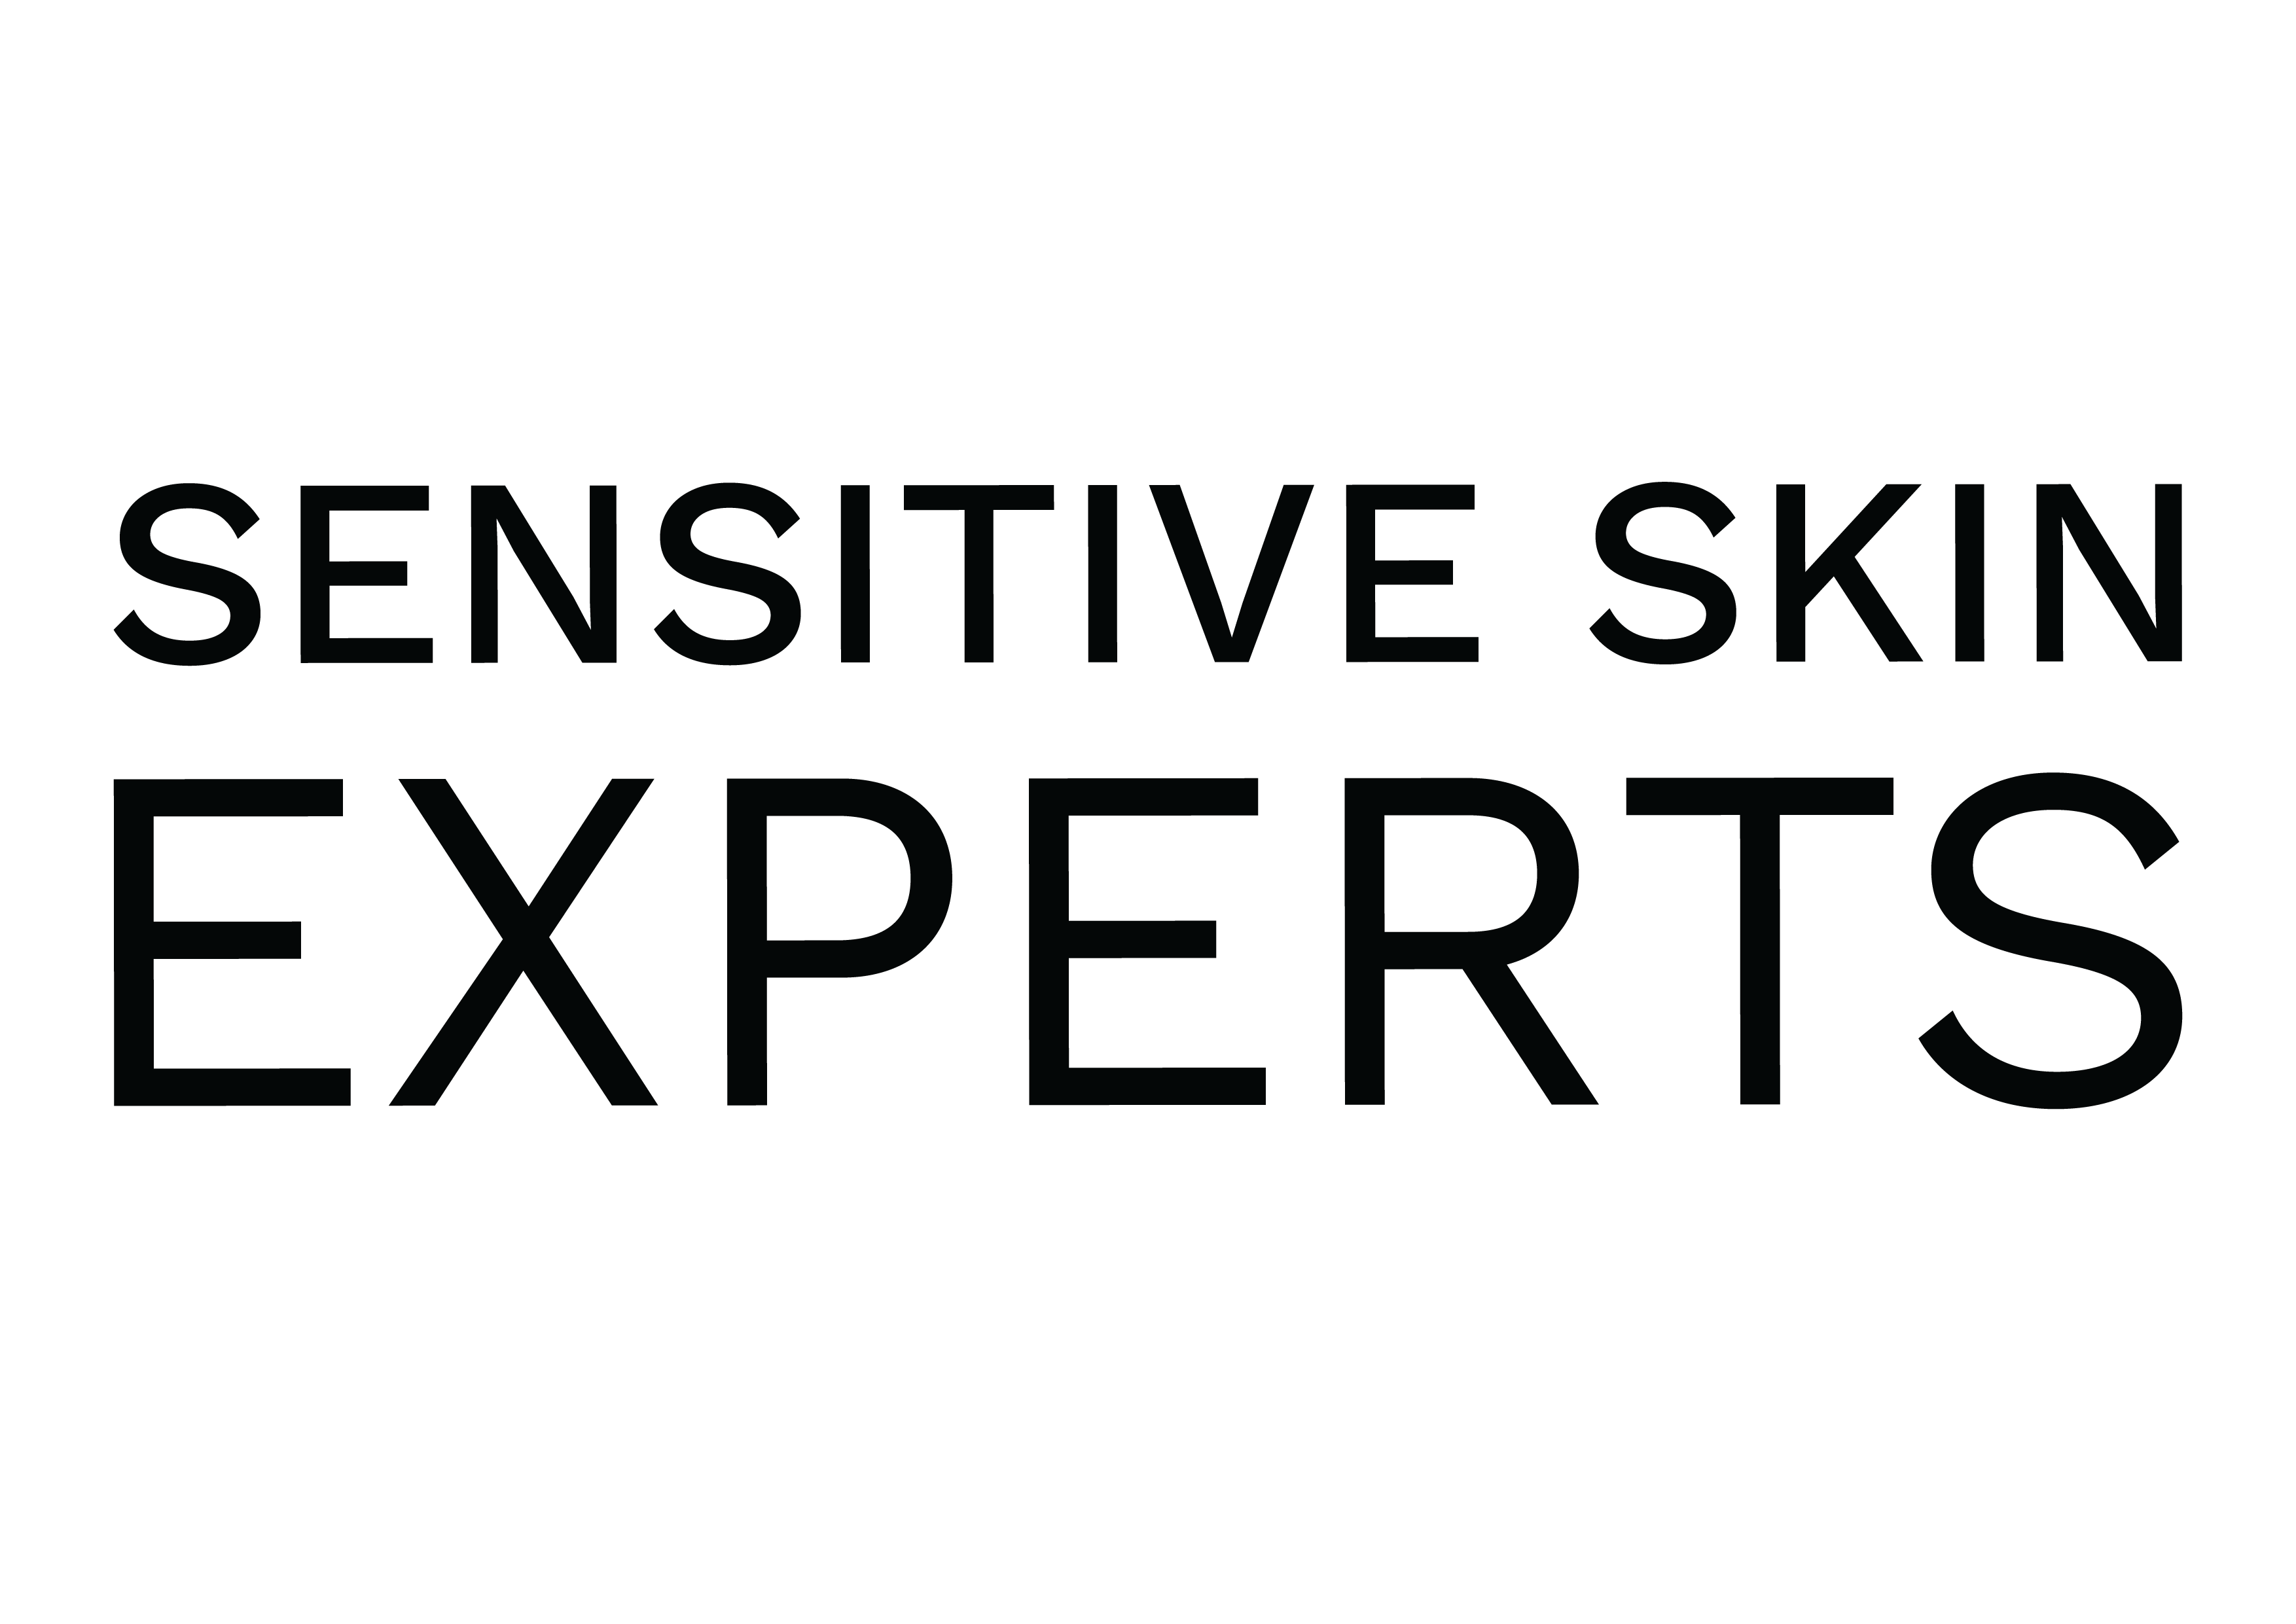 Sensitive_Skin_Experts-02.png